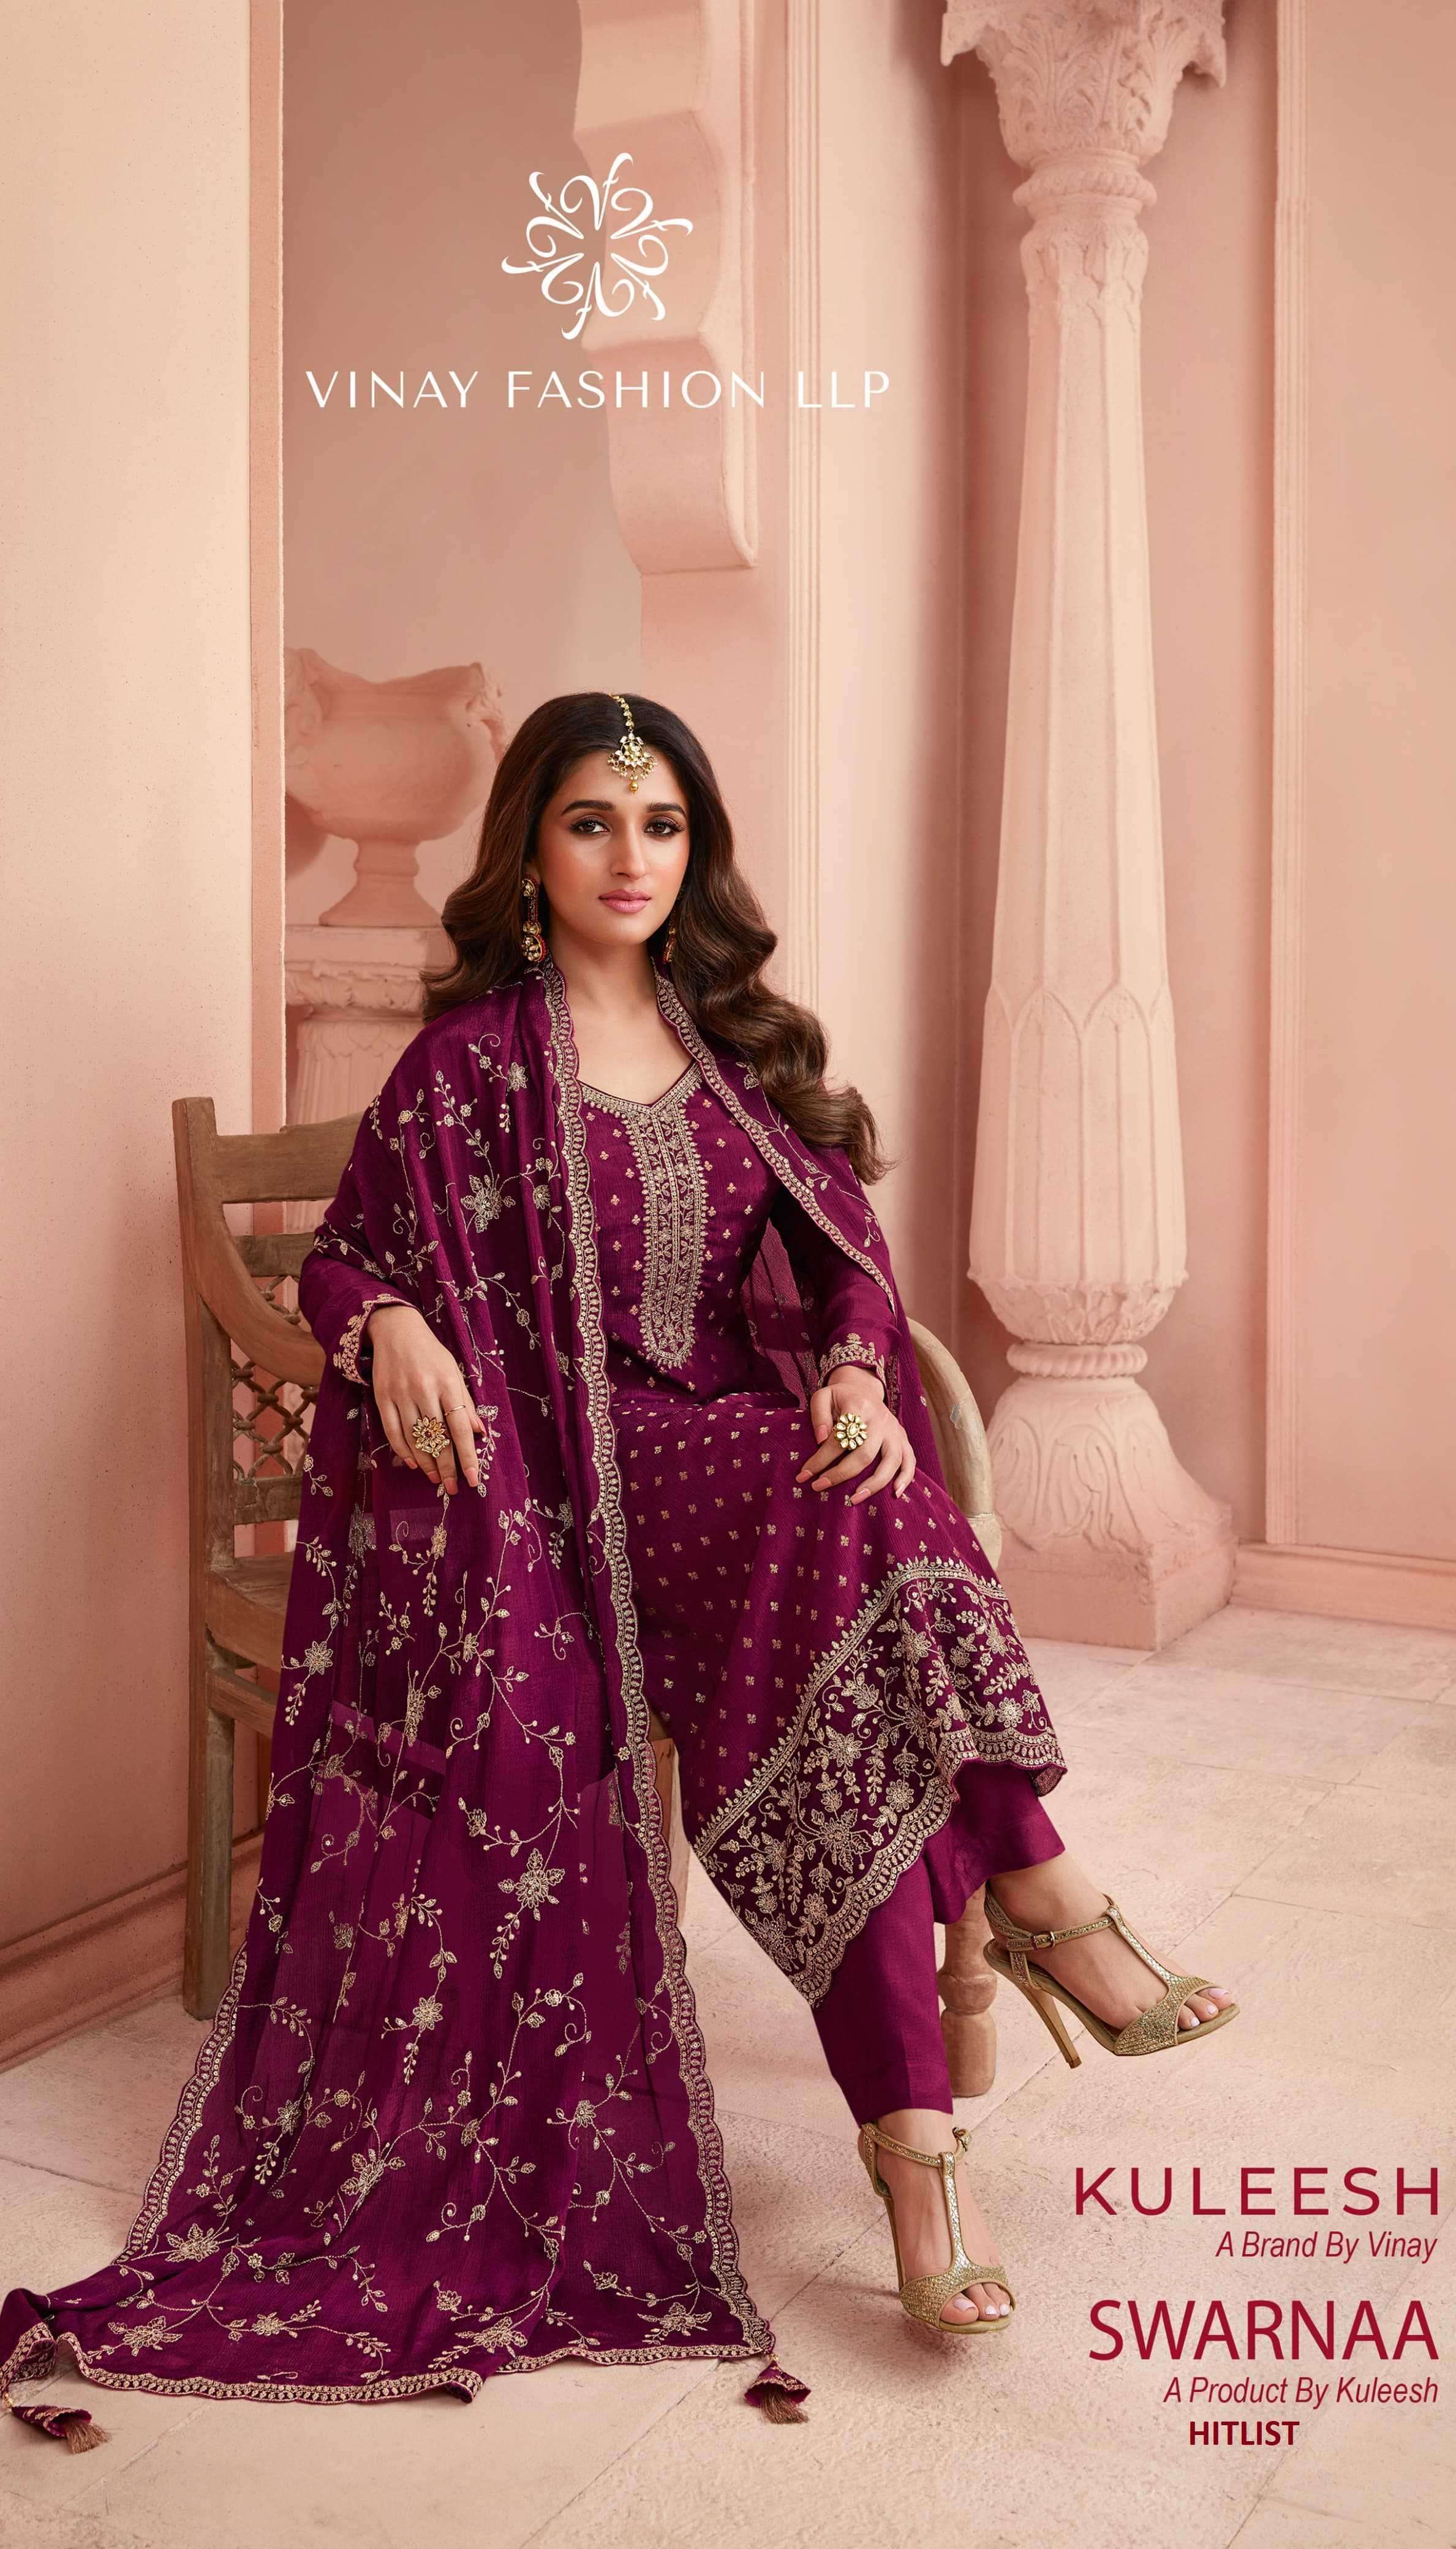 Vinay fashion presents Swarnaa hitlist dola Jacquard designer salwar suit wholesaler 